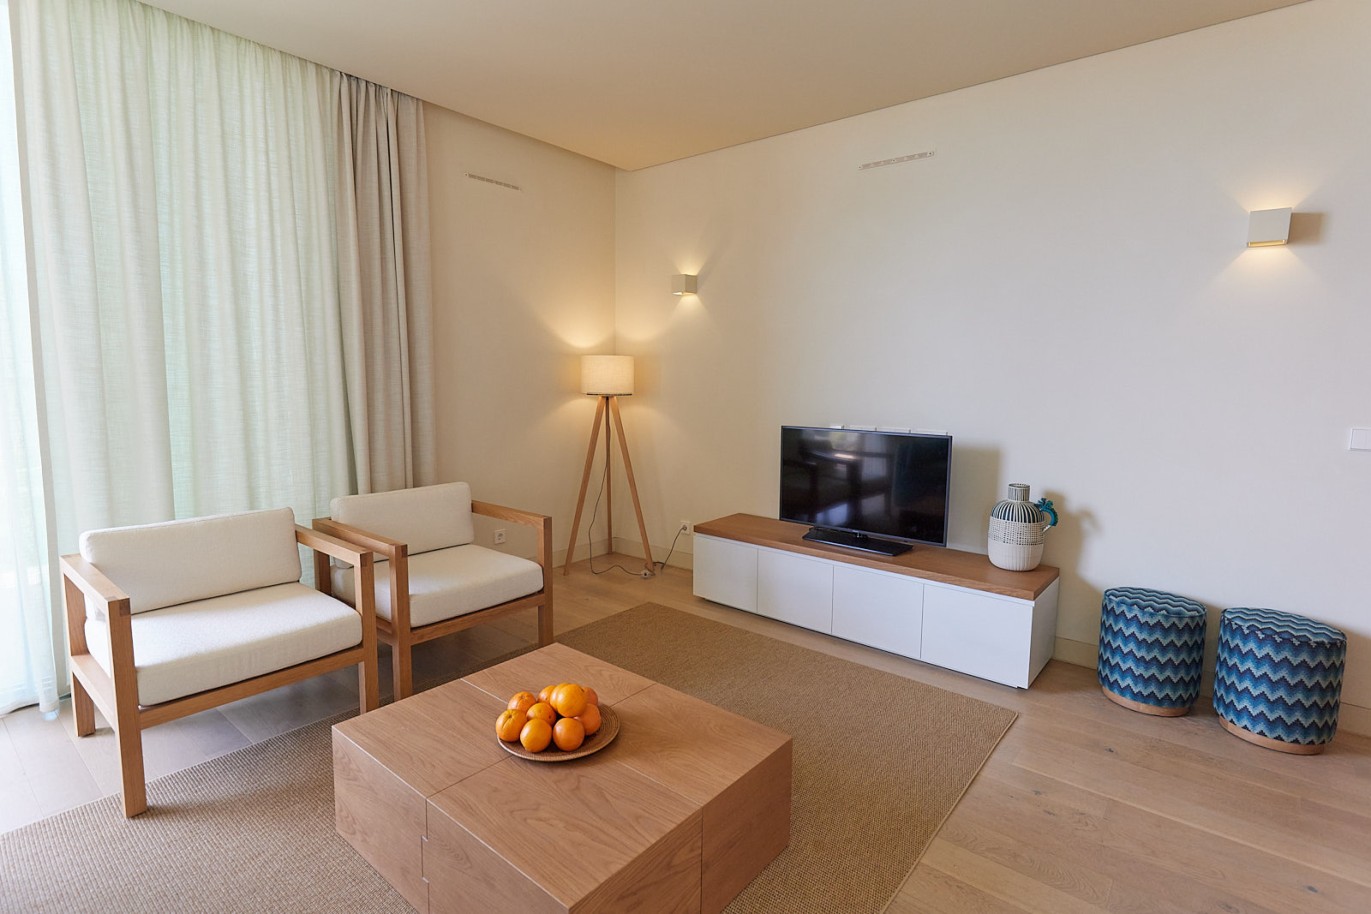 2 bedroom apartment in resort, for sale in Porches, Algarve_228836